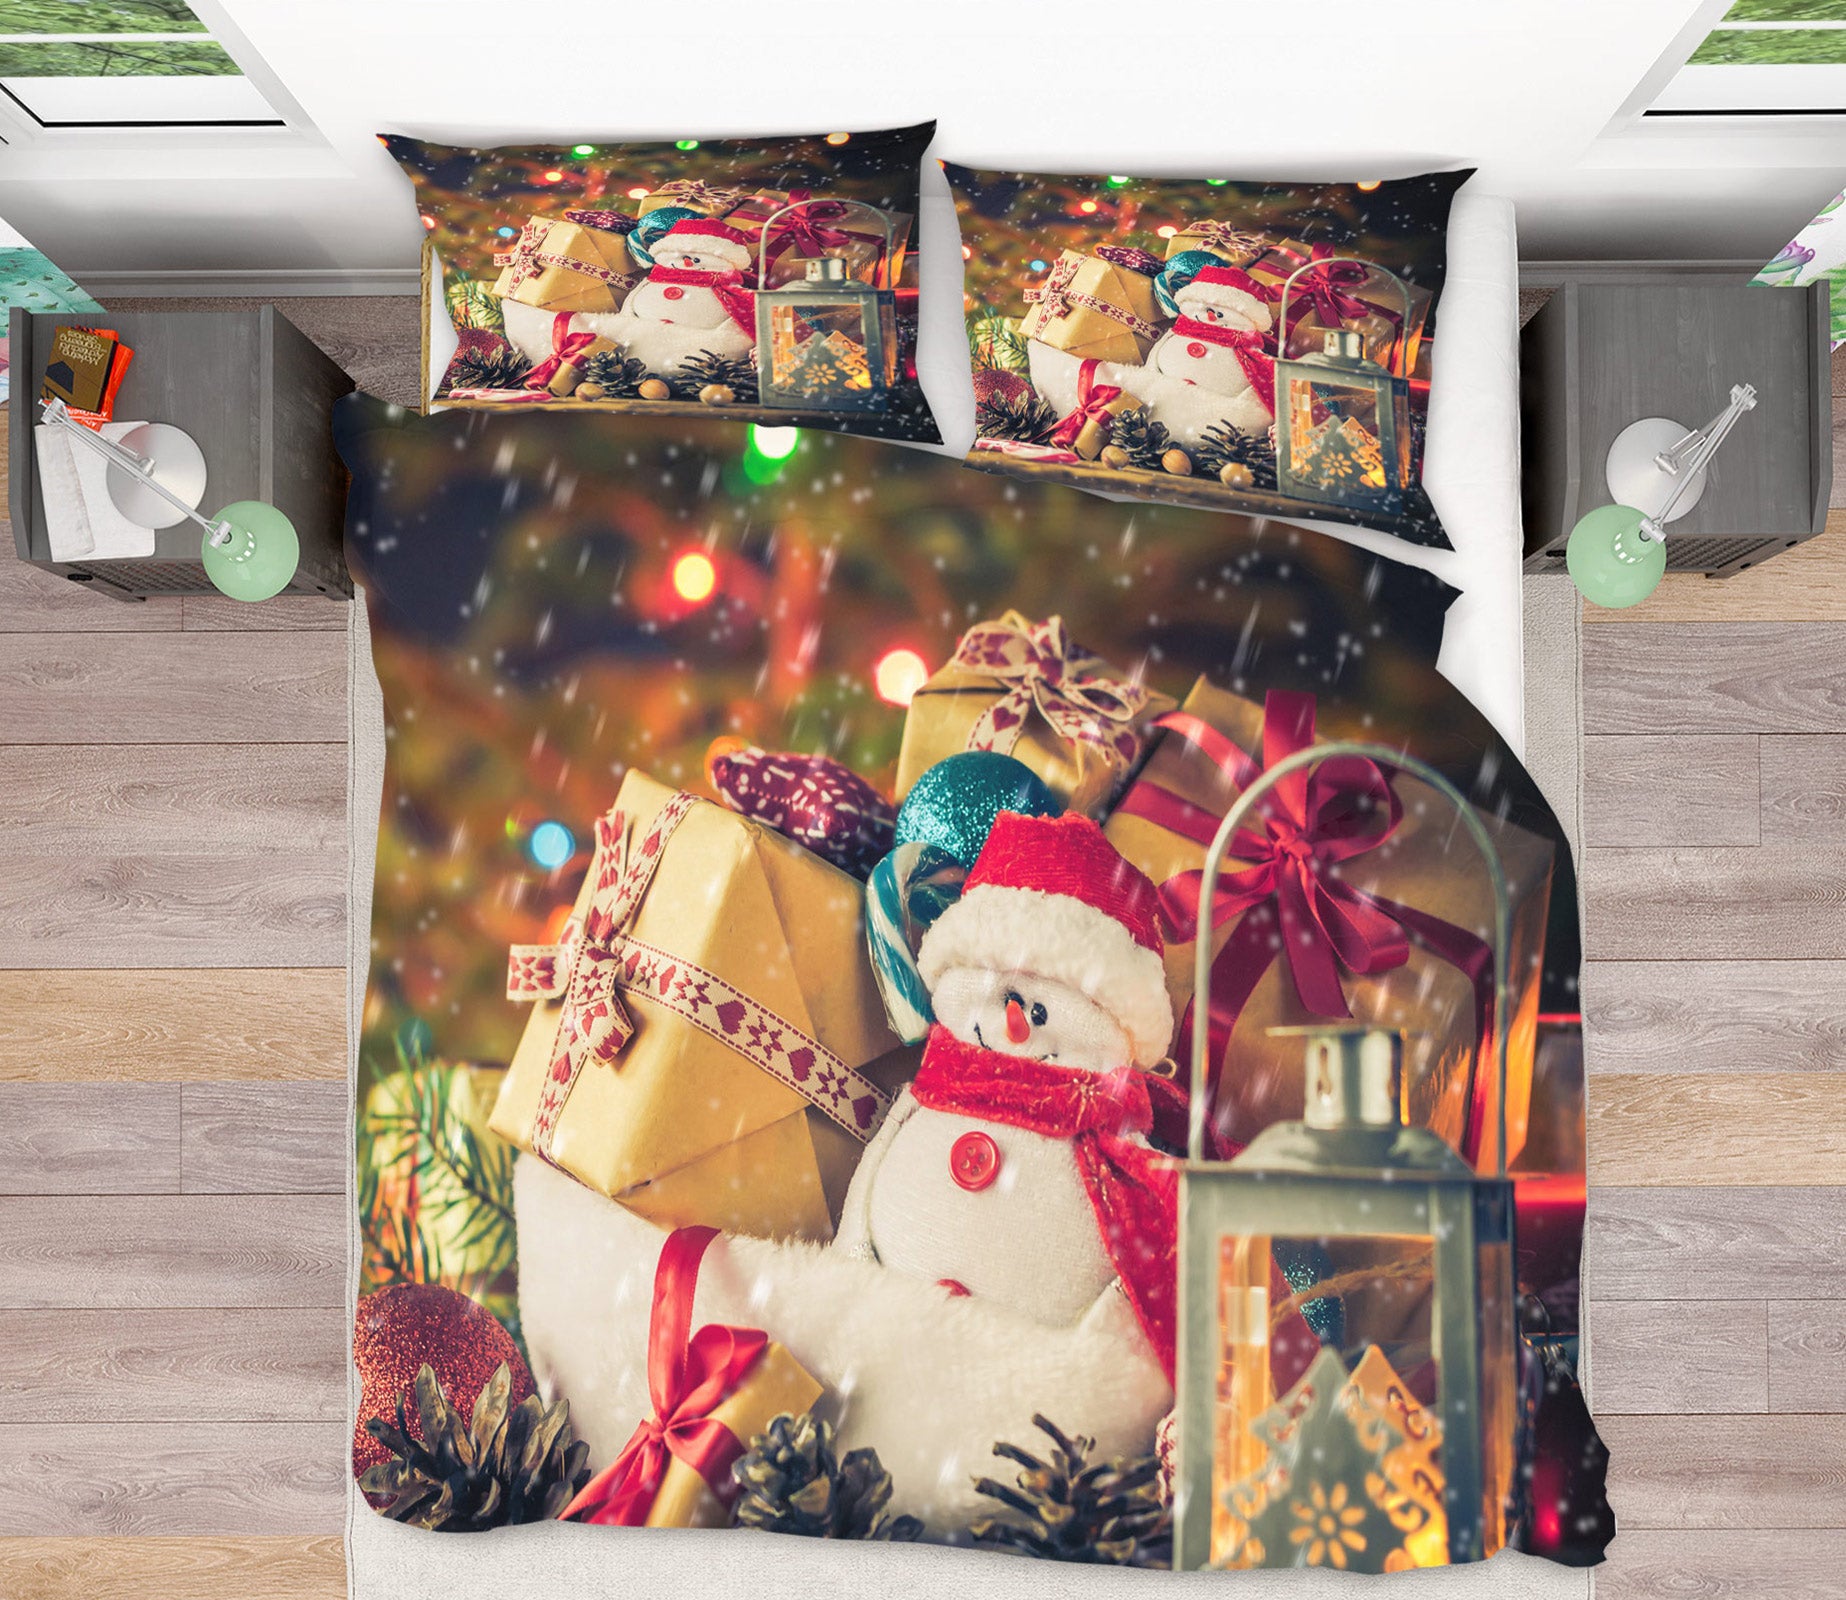 3D Snowman Doll Gift 52131 Christmas Quilt Duvet Cover Xmas Bed Pillowcases